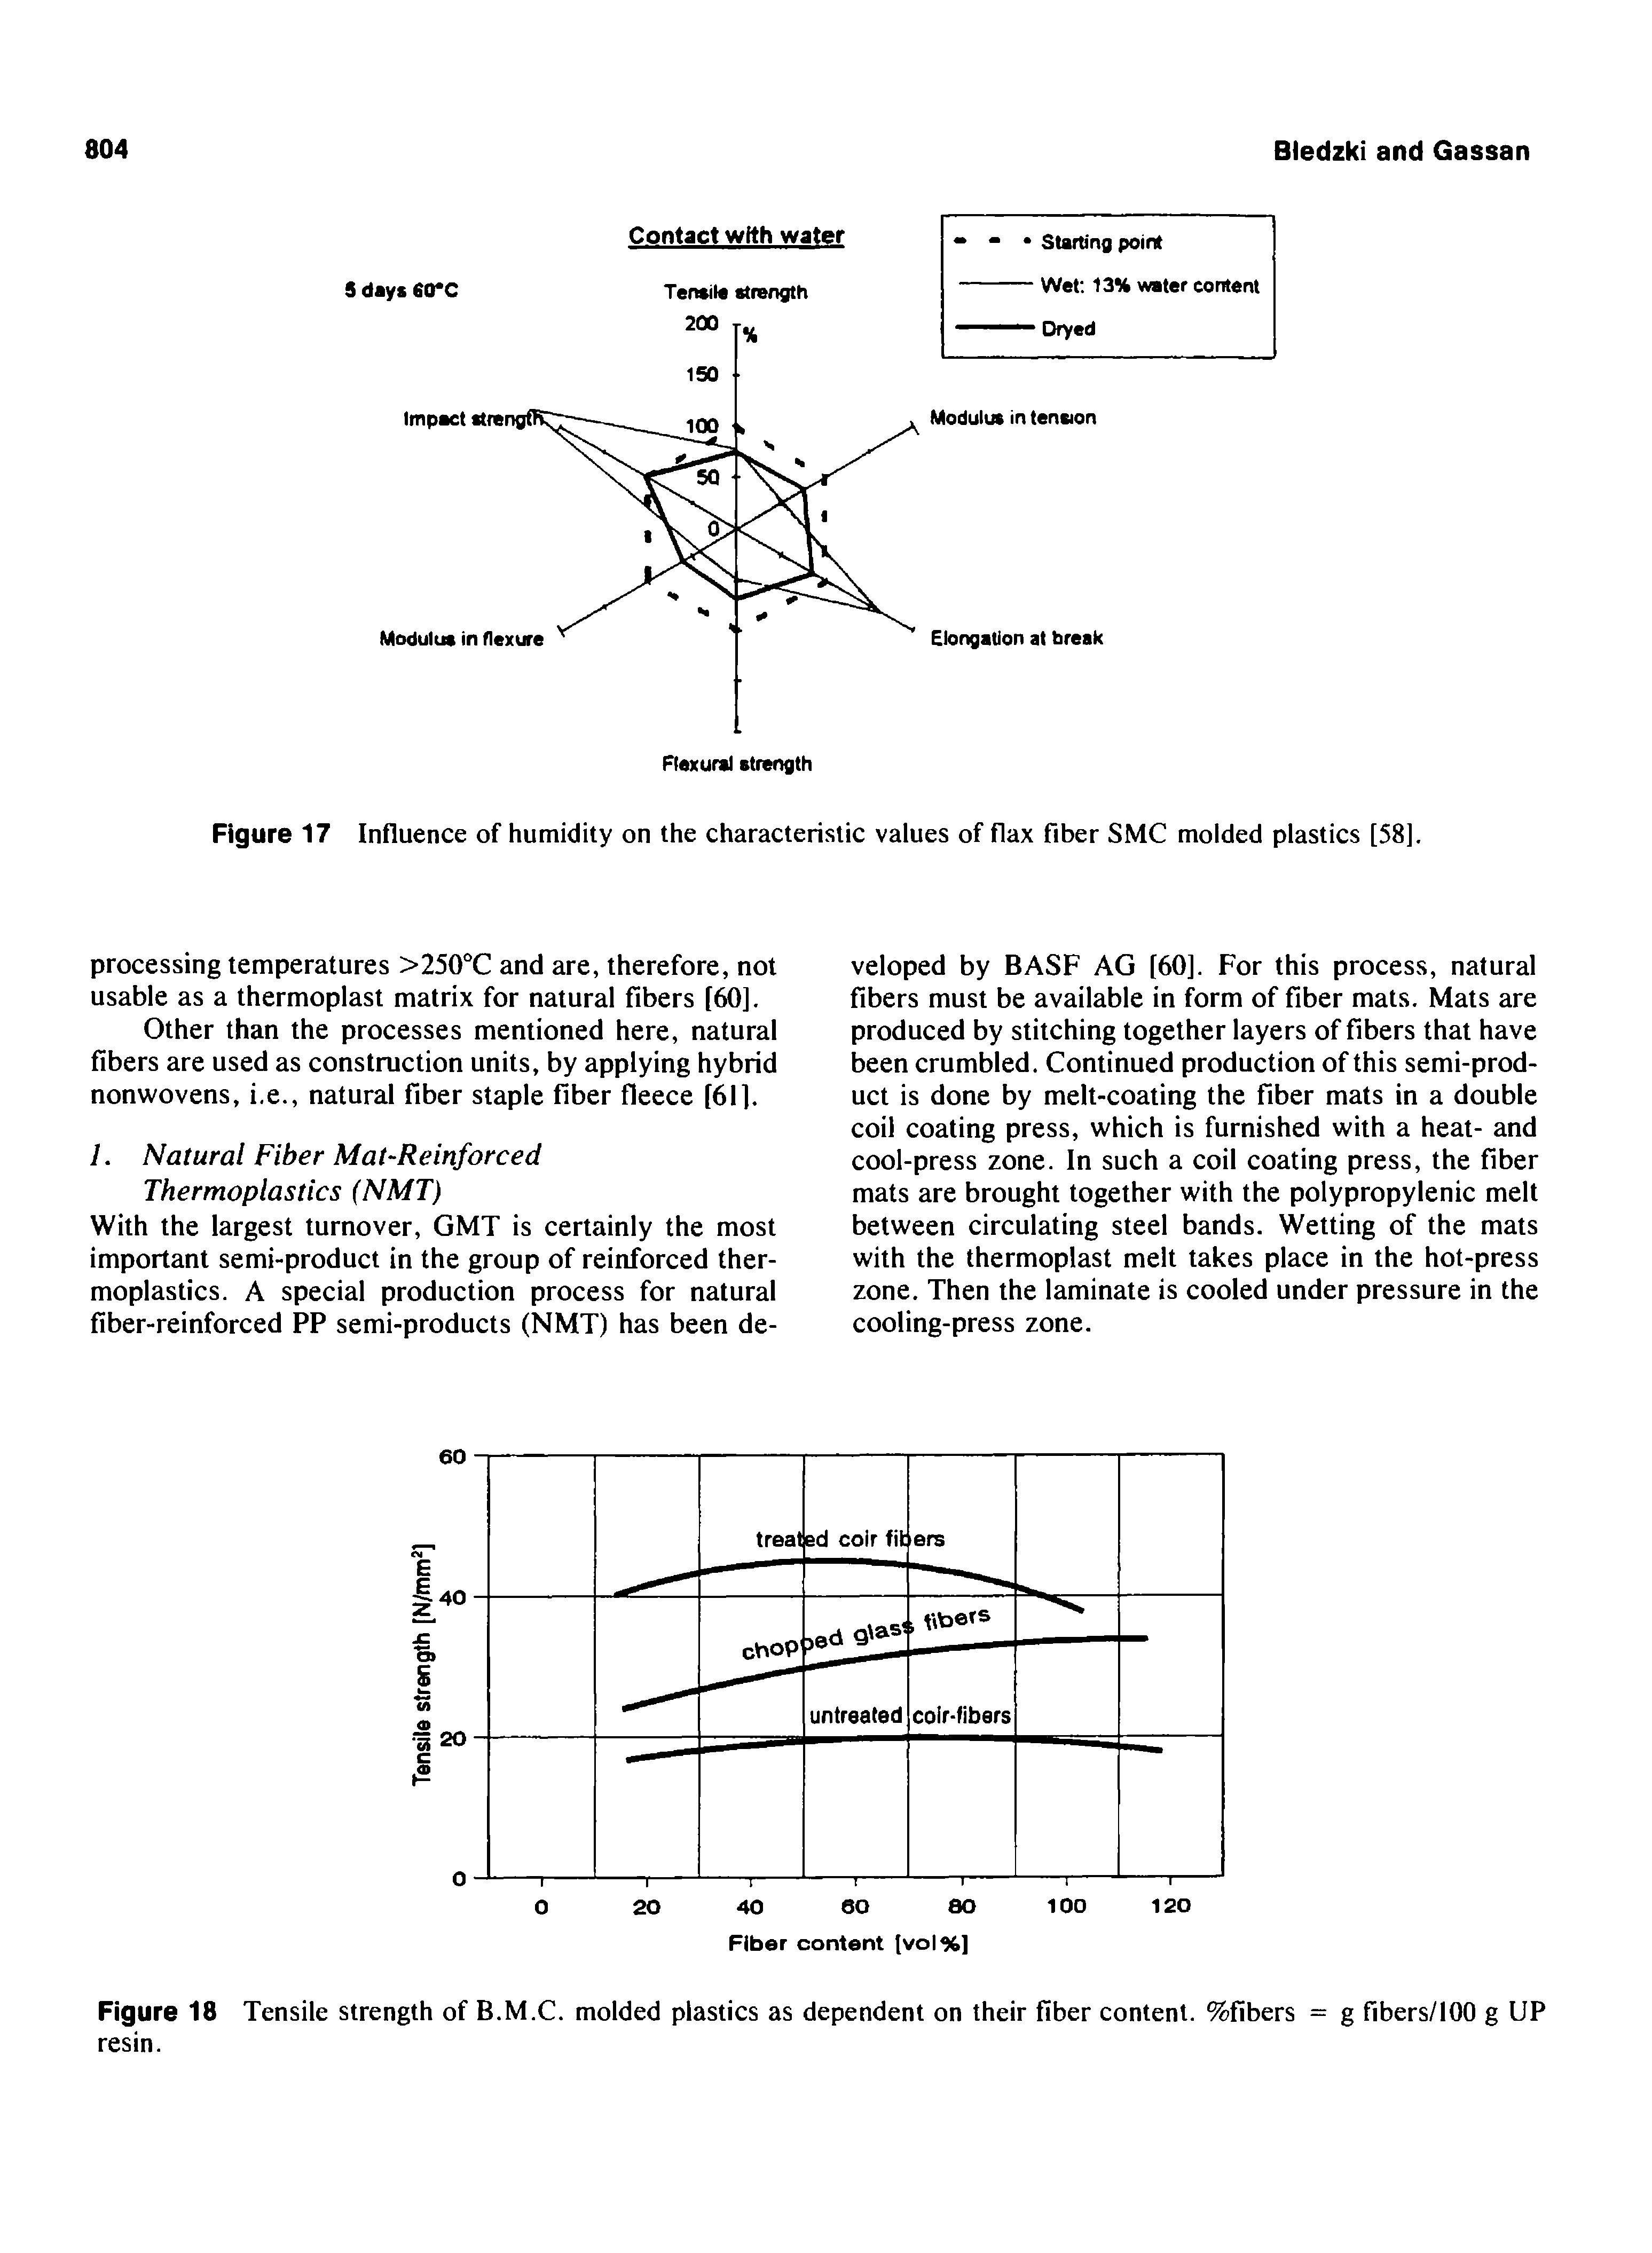 Figure 17 Influence of humidity on the characteristic values of flax fiber SMC molded plastics [58].